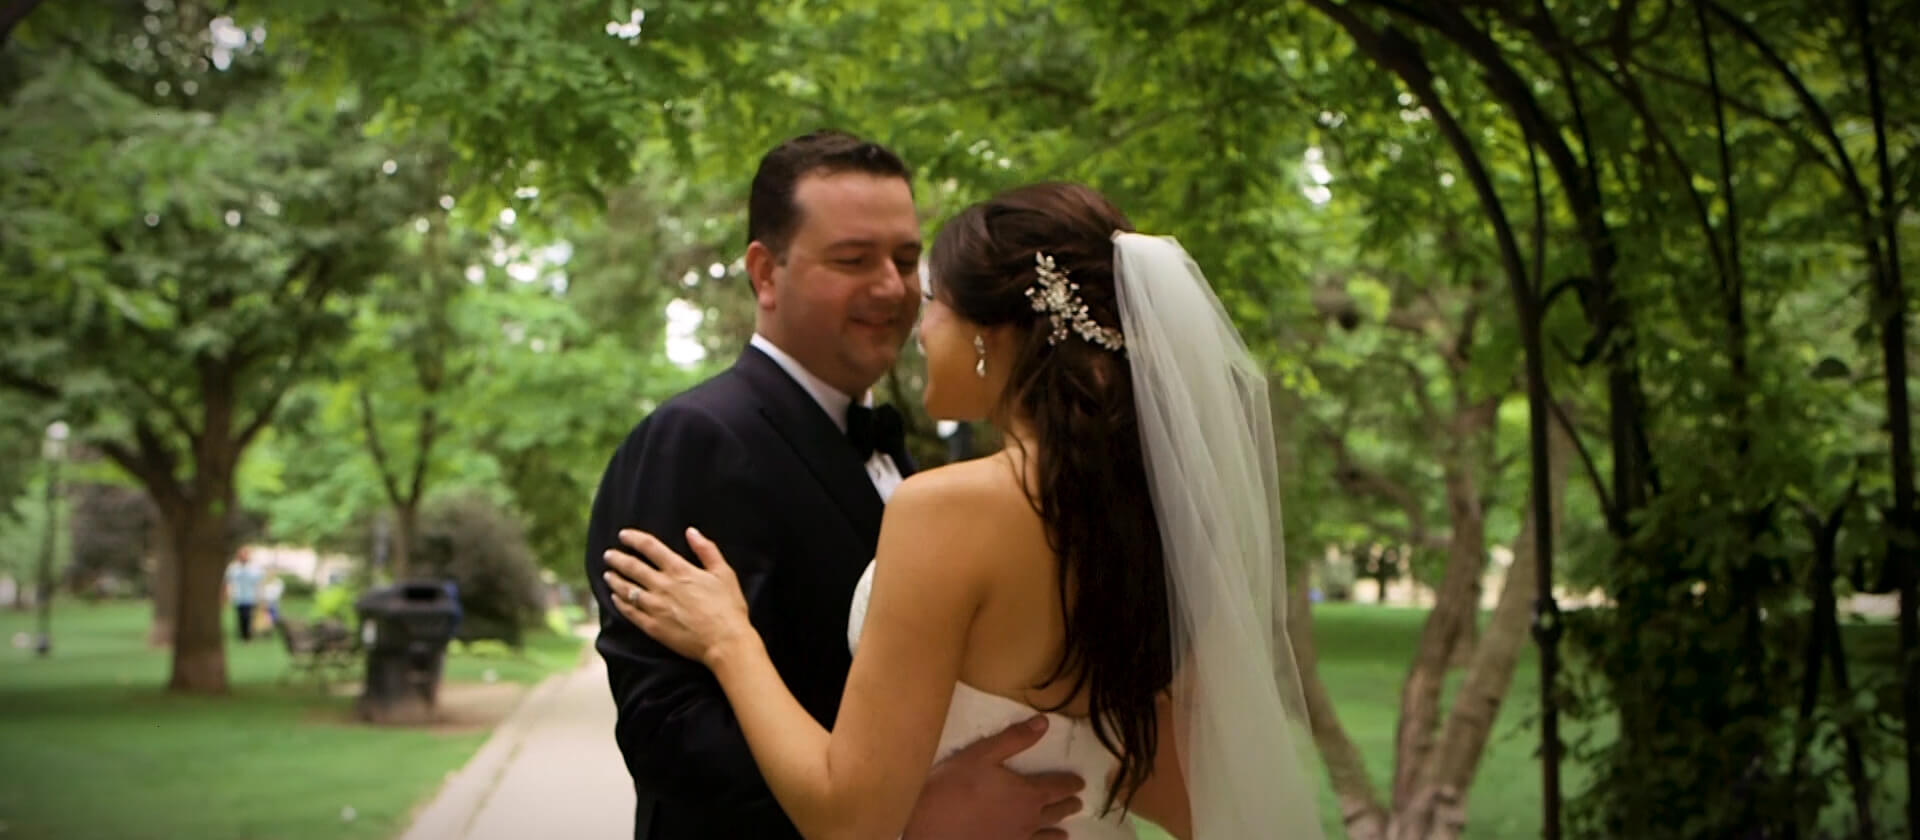 Toronto Reference Library Wedding Videographer